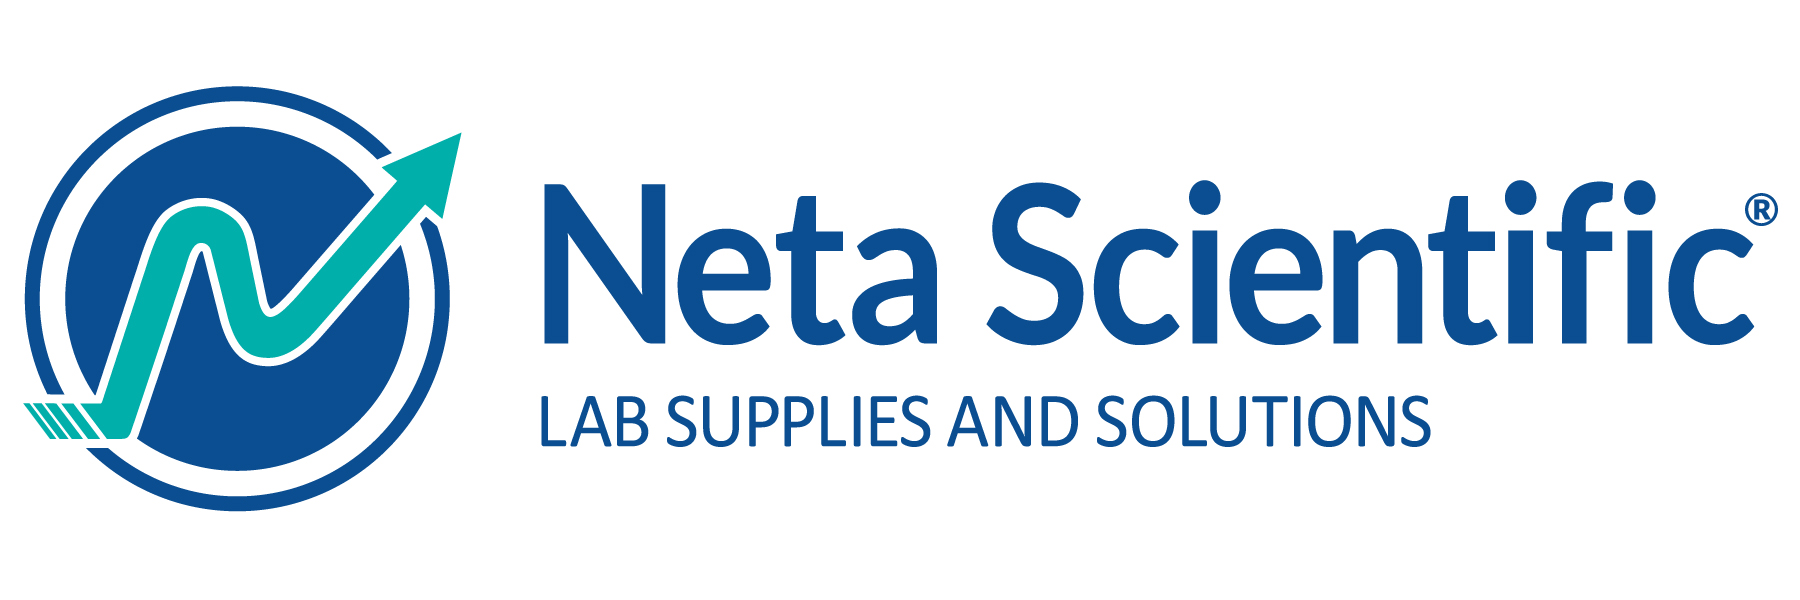 Neta Scientific Incorporated Logo